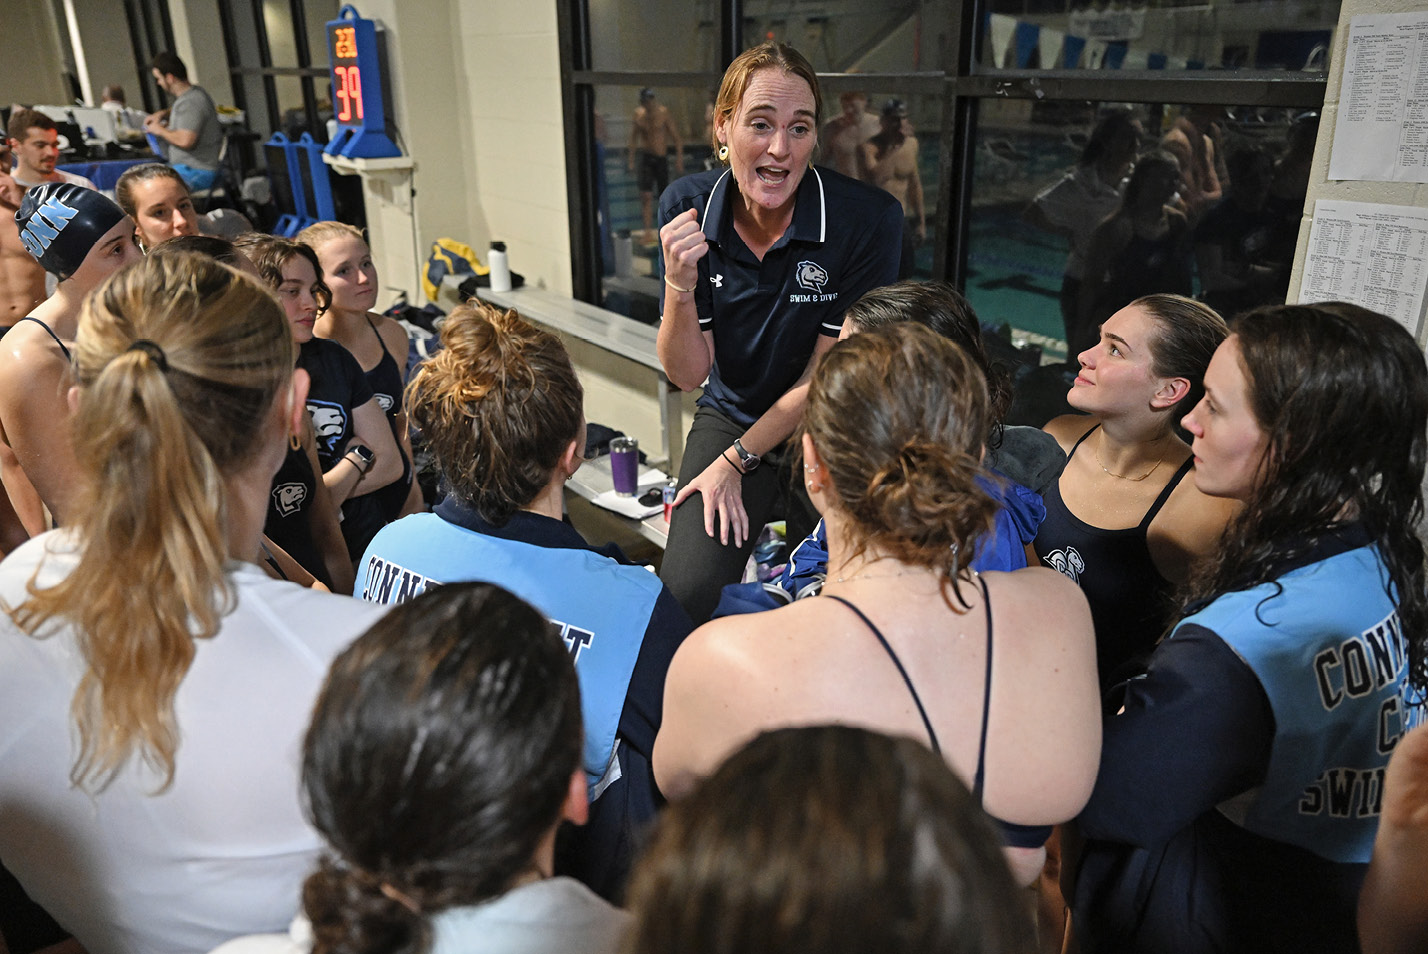 Women's swim coach talks with the team